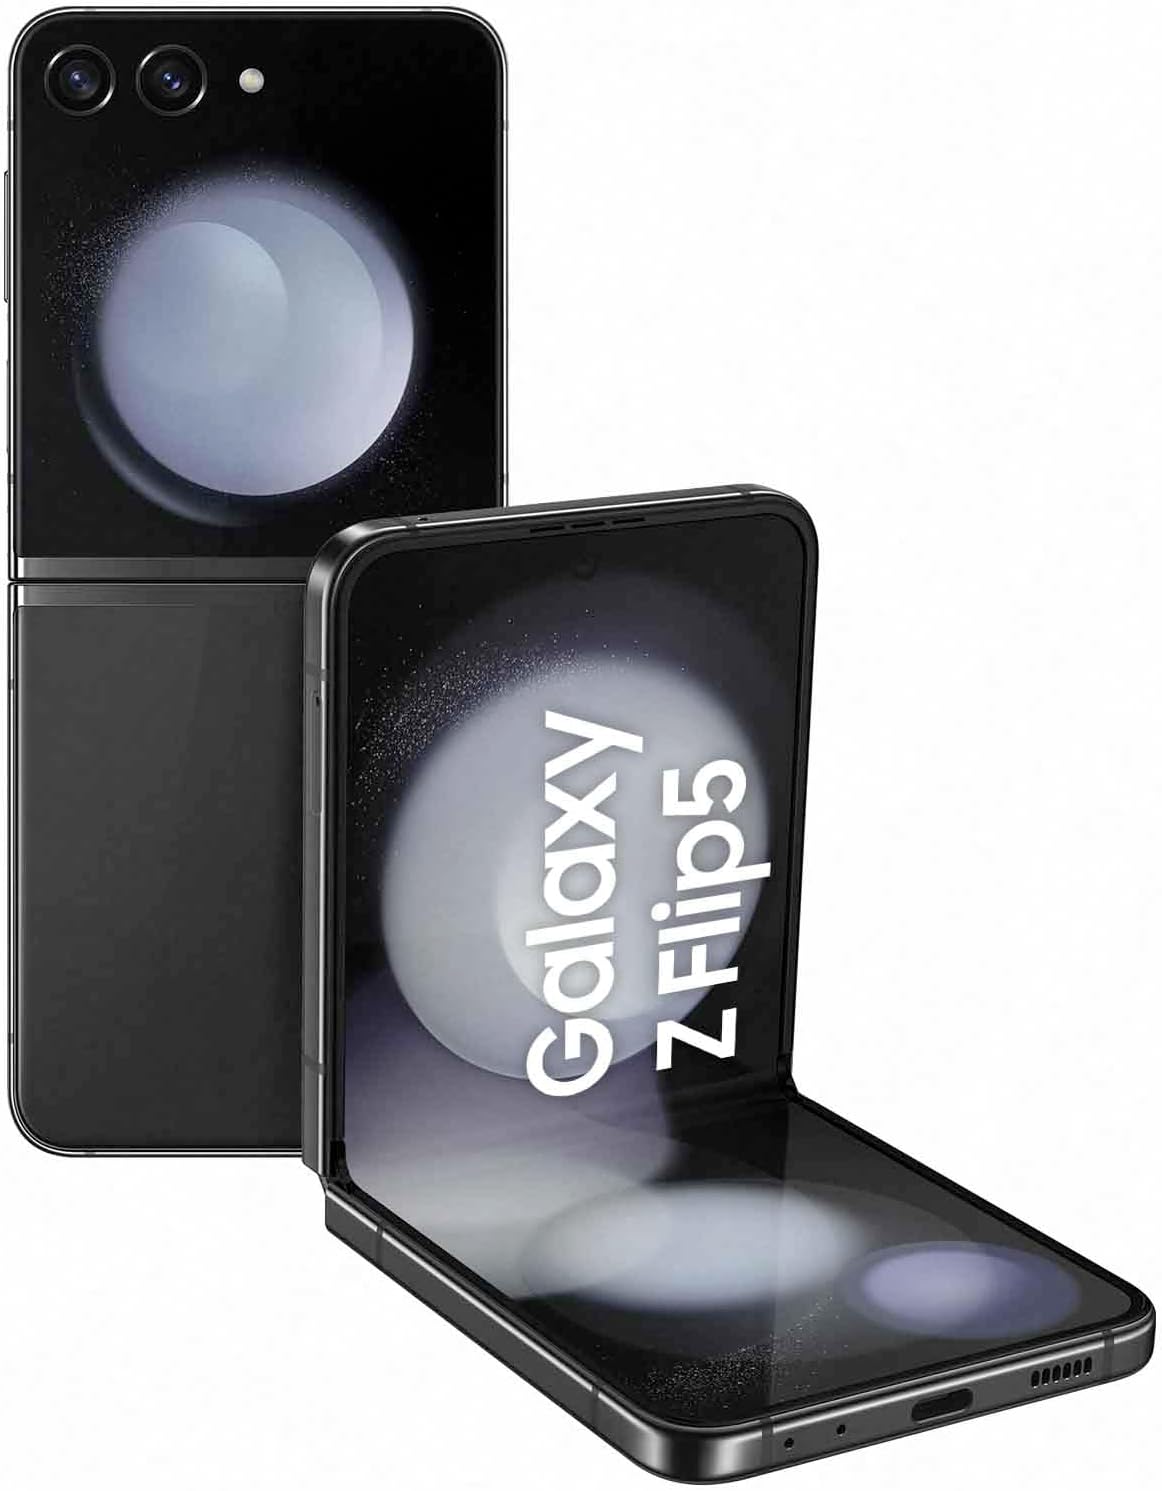 Galaxy Z Flip5,8GB RAM, 512GB Storage, Lavender (International Version)